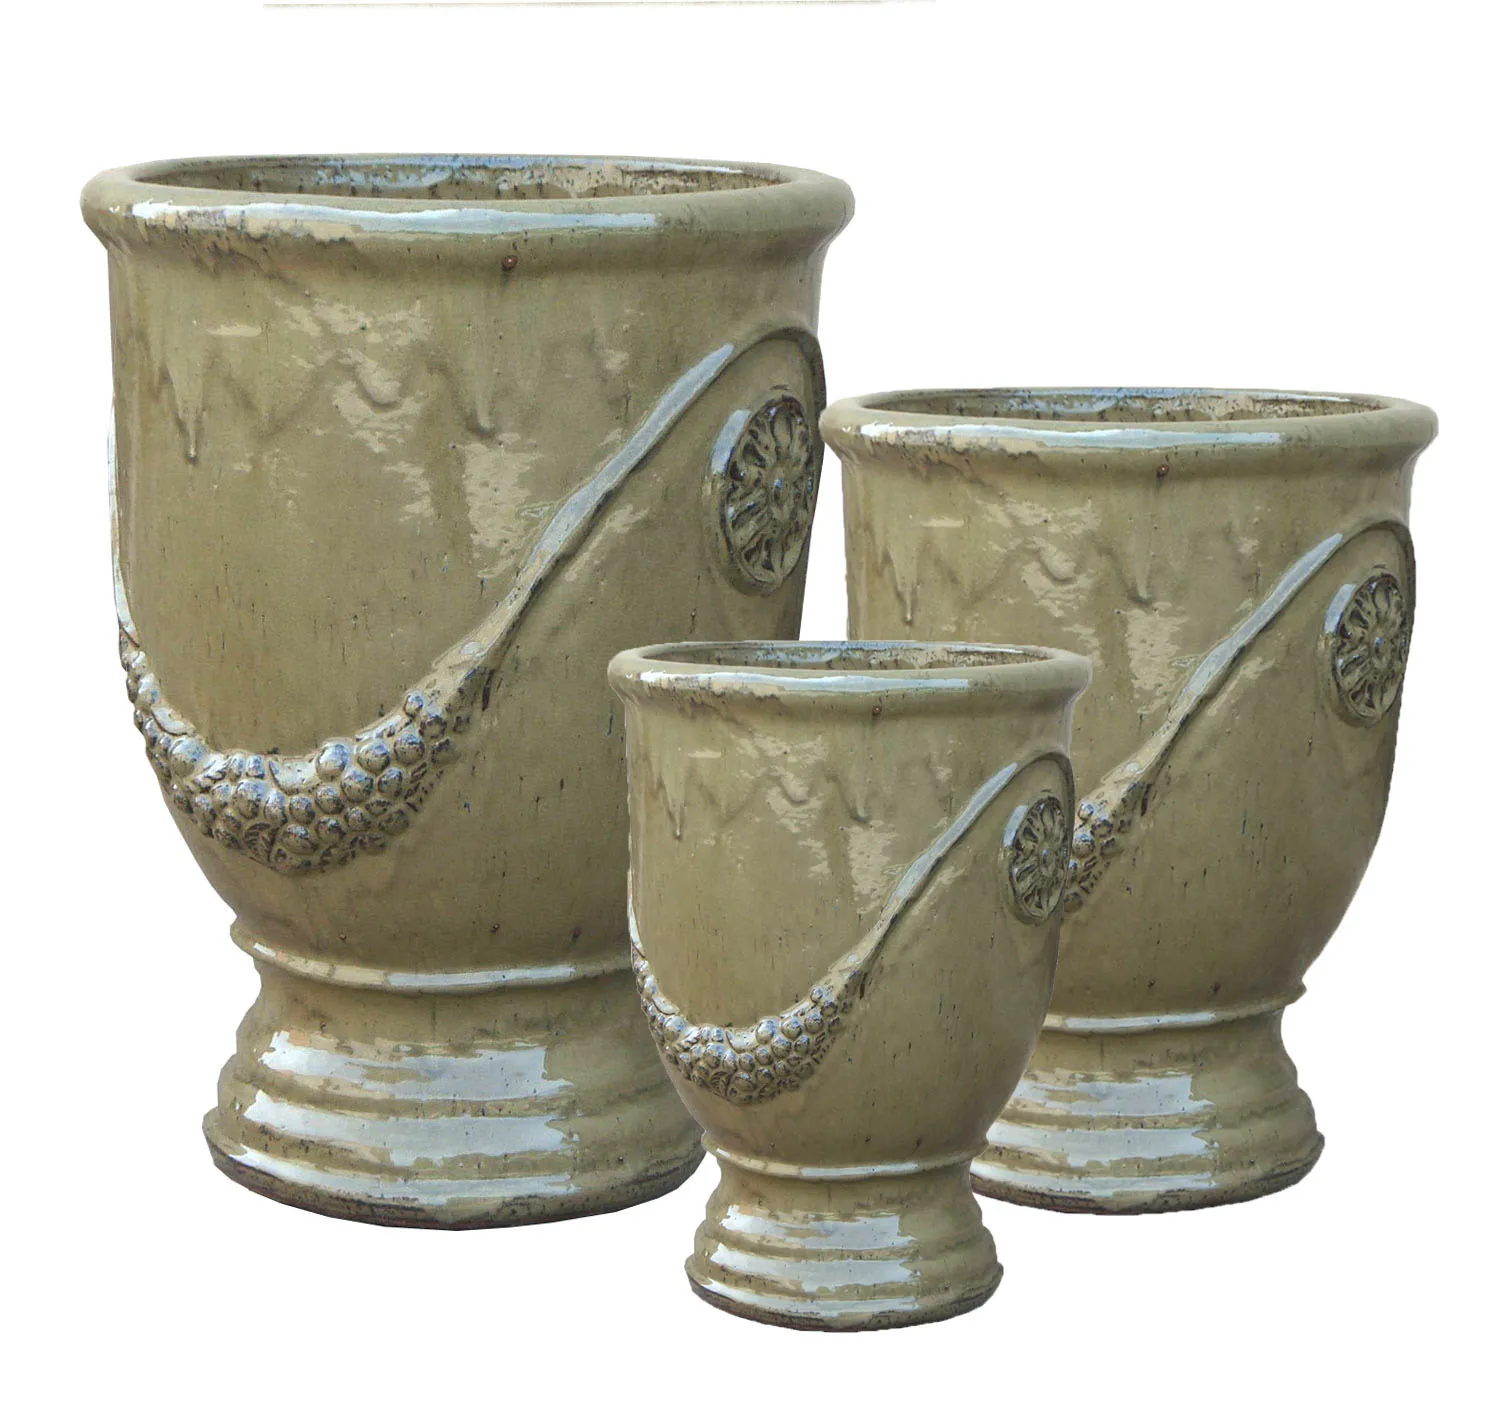 Wholesale European-Style Glazed Ceramic Flower Pots Outdoor Designed for Home & Nursery for Floor Planting in Garden or Room